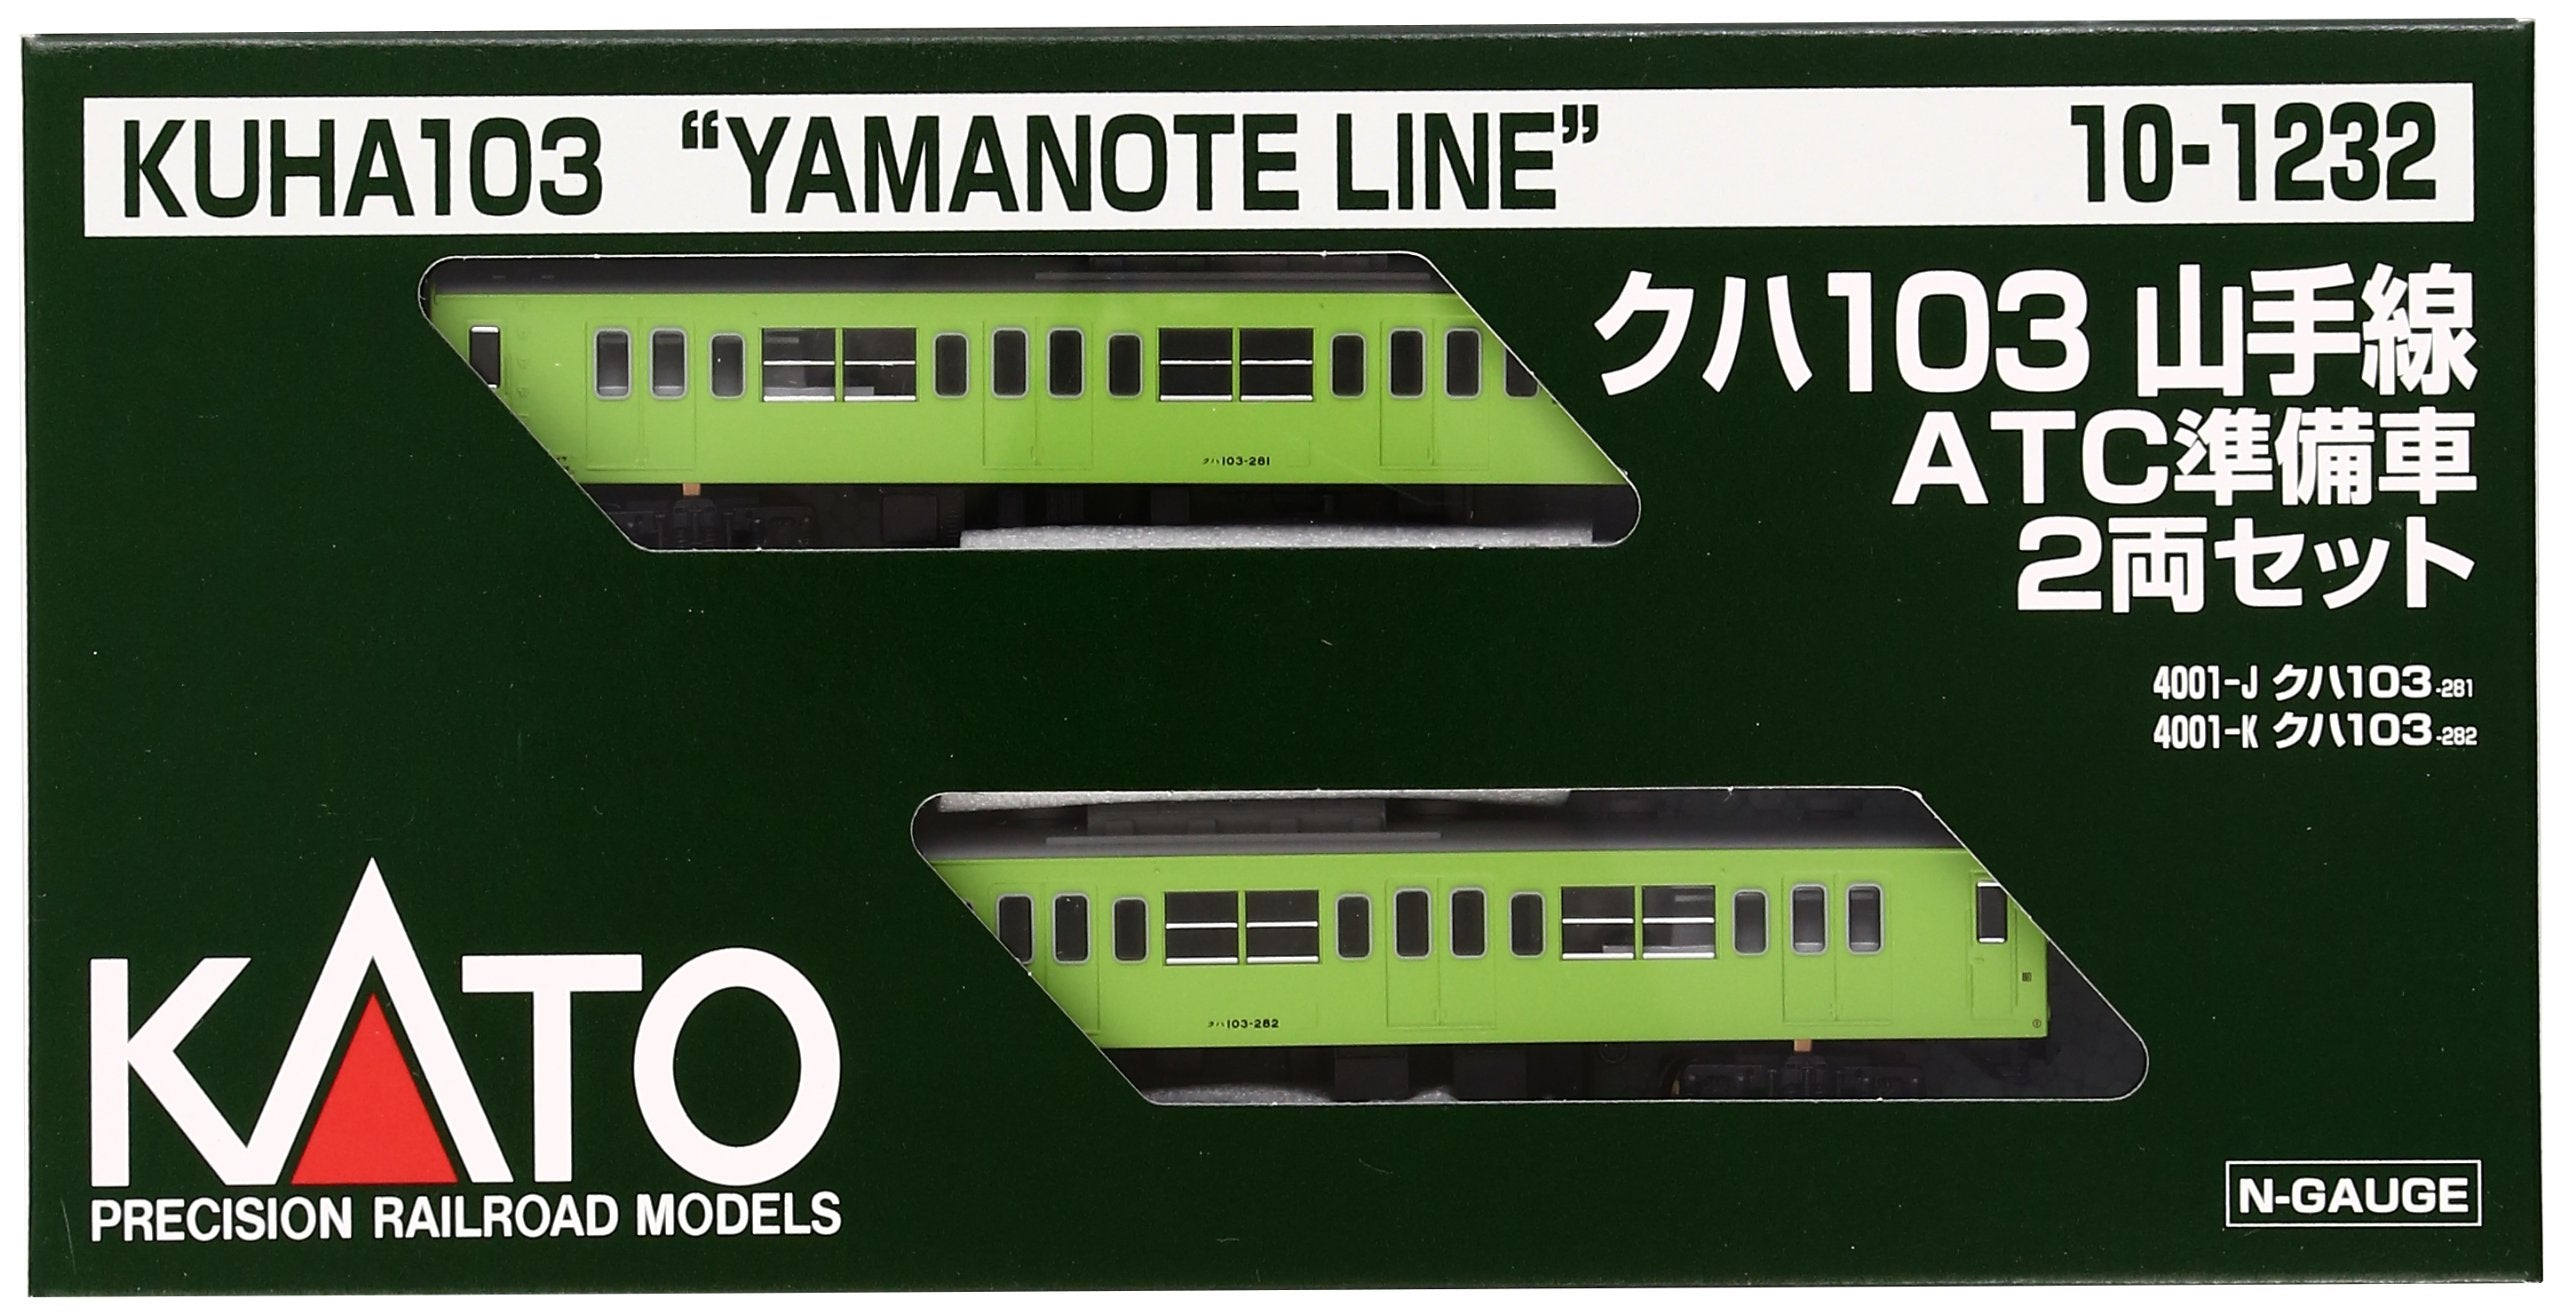 Kato N Gauge 10-1232 Yamanote Line 2-Car Set Kuha103 ATC Model Railway Train